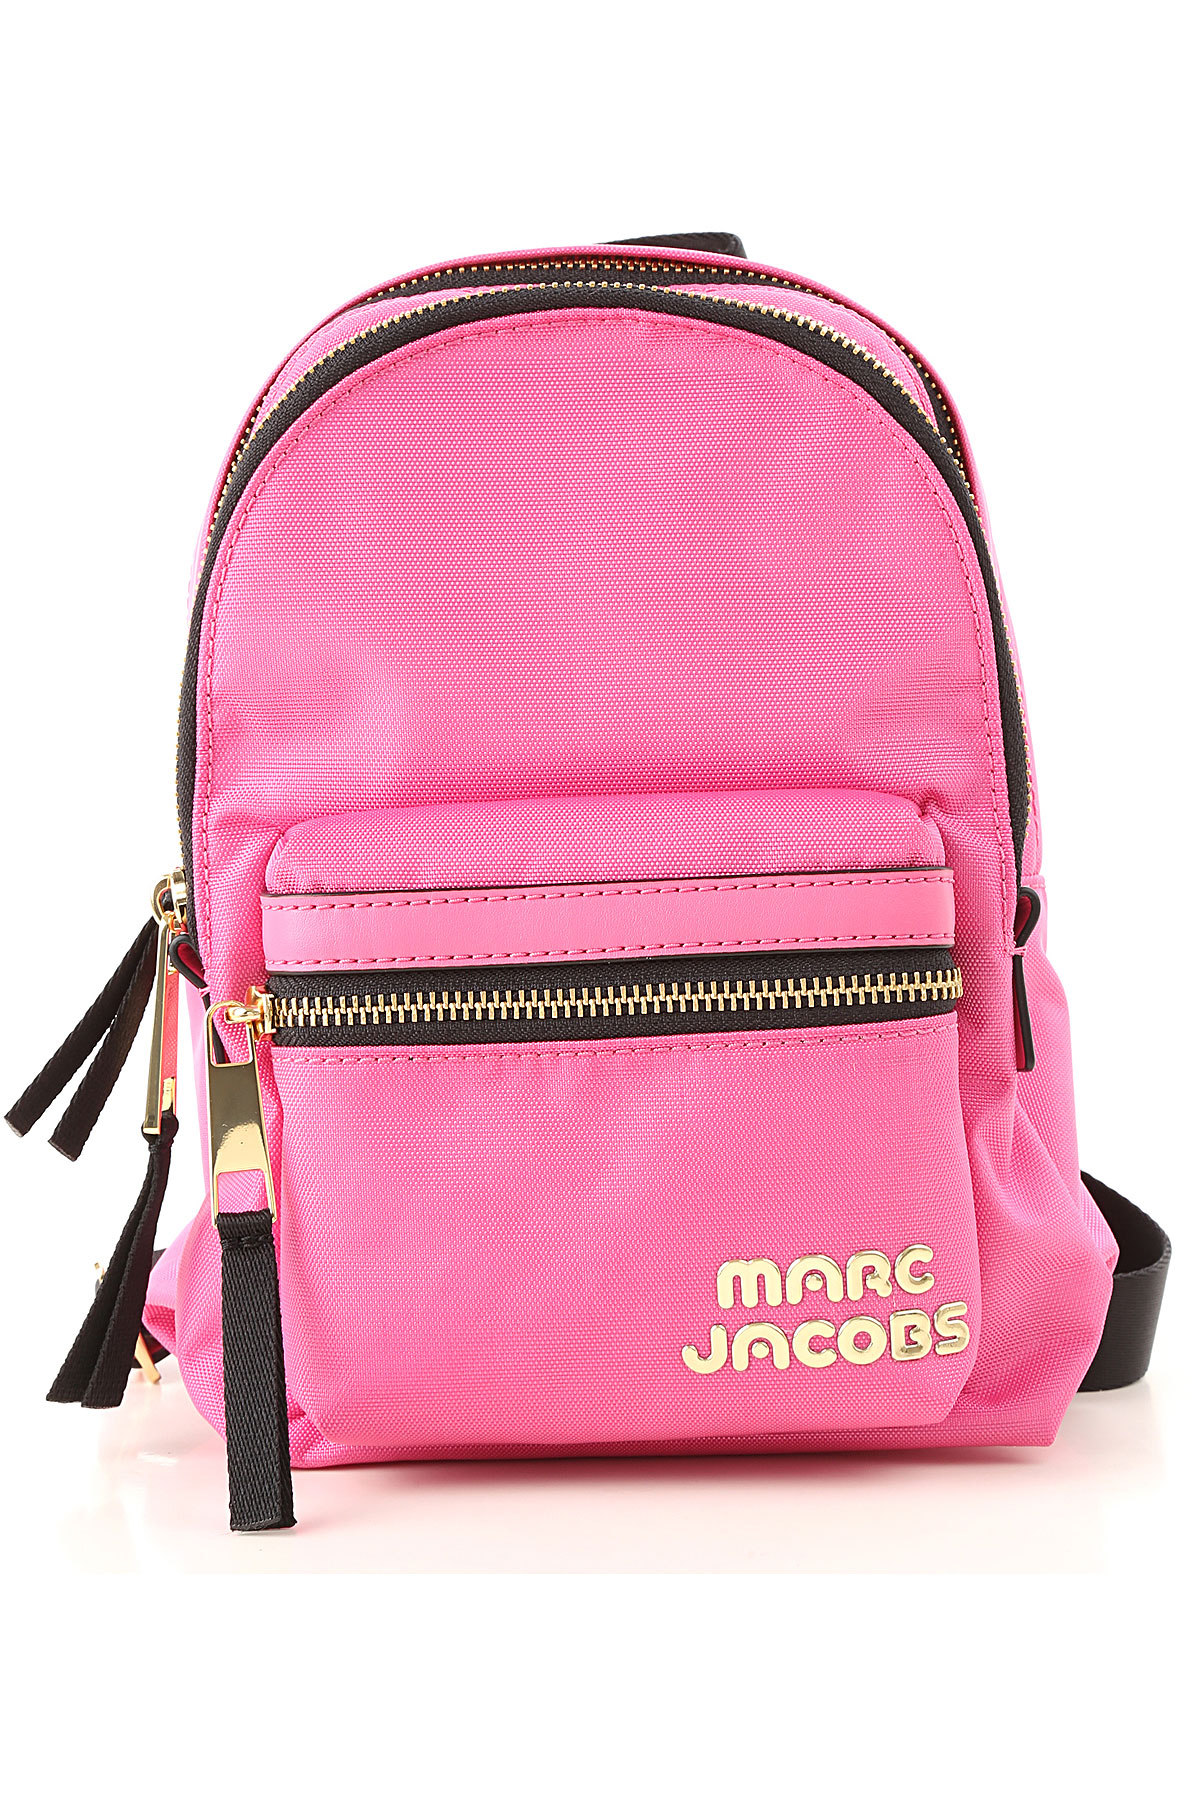 Handbags Marc Jacobs, Style code: m0014032-657-